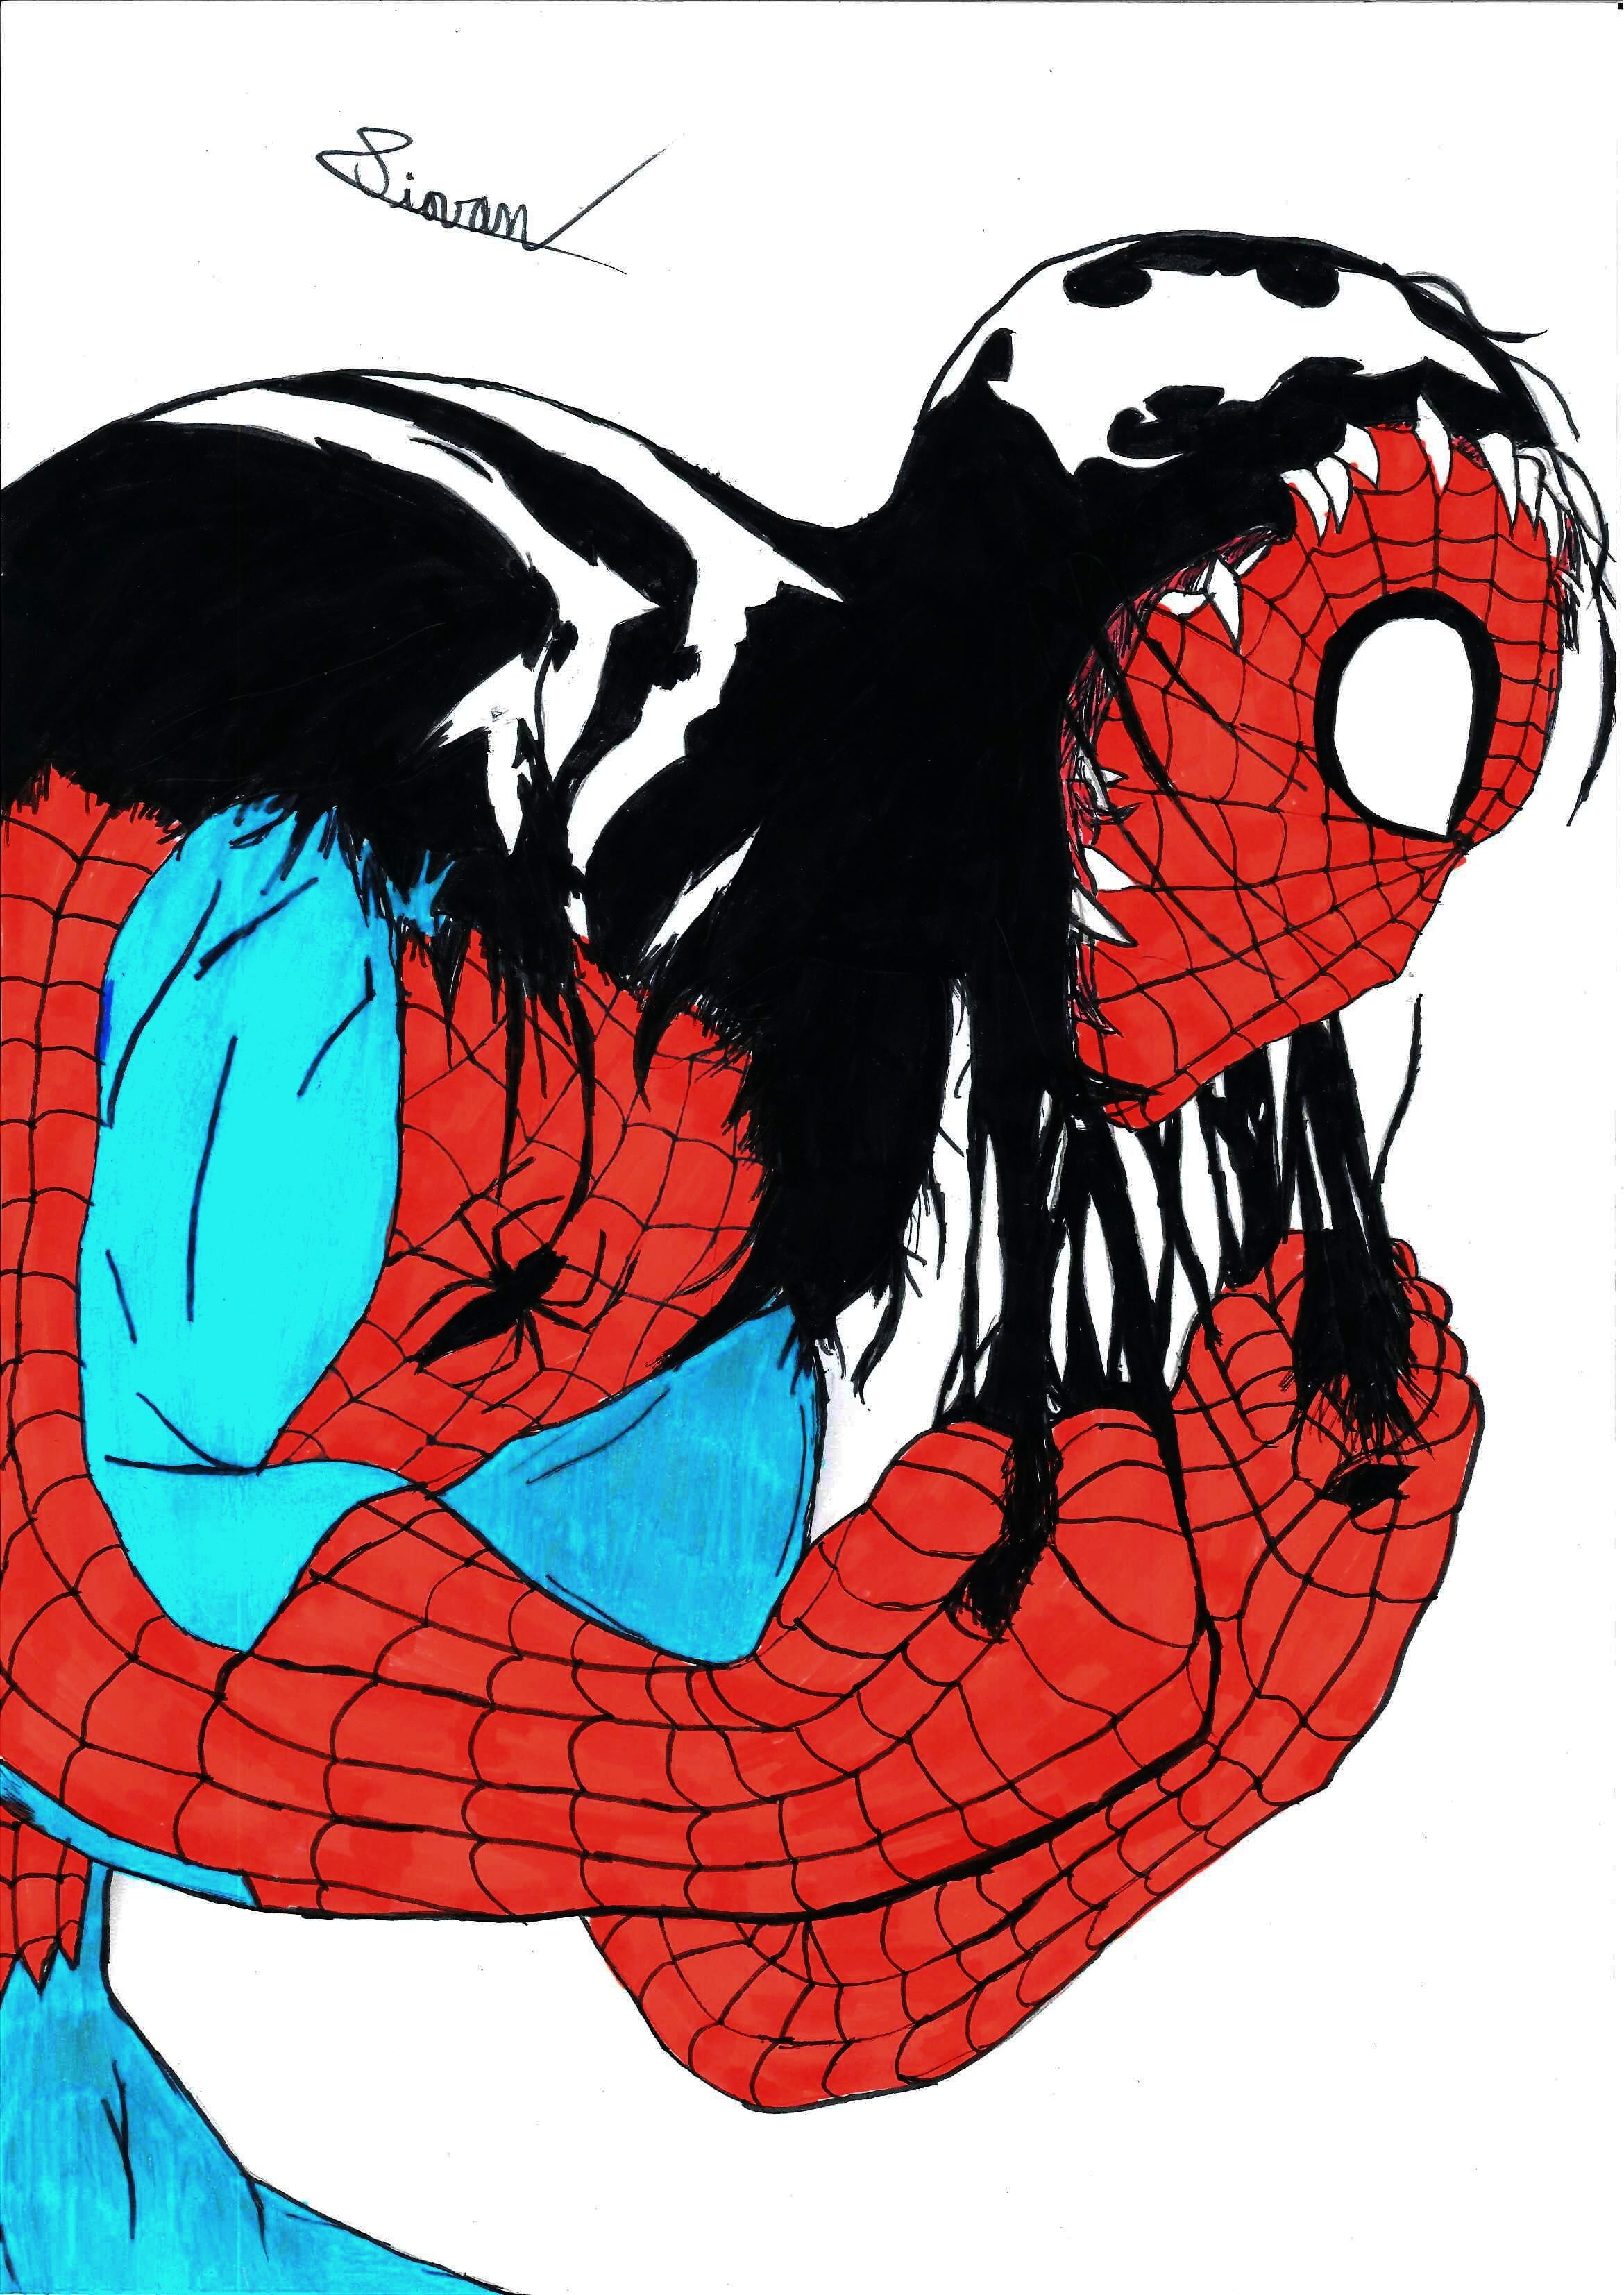 Spider-Man fanart, Venom, art and craft, representation, creativity